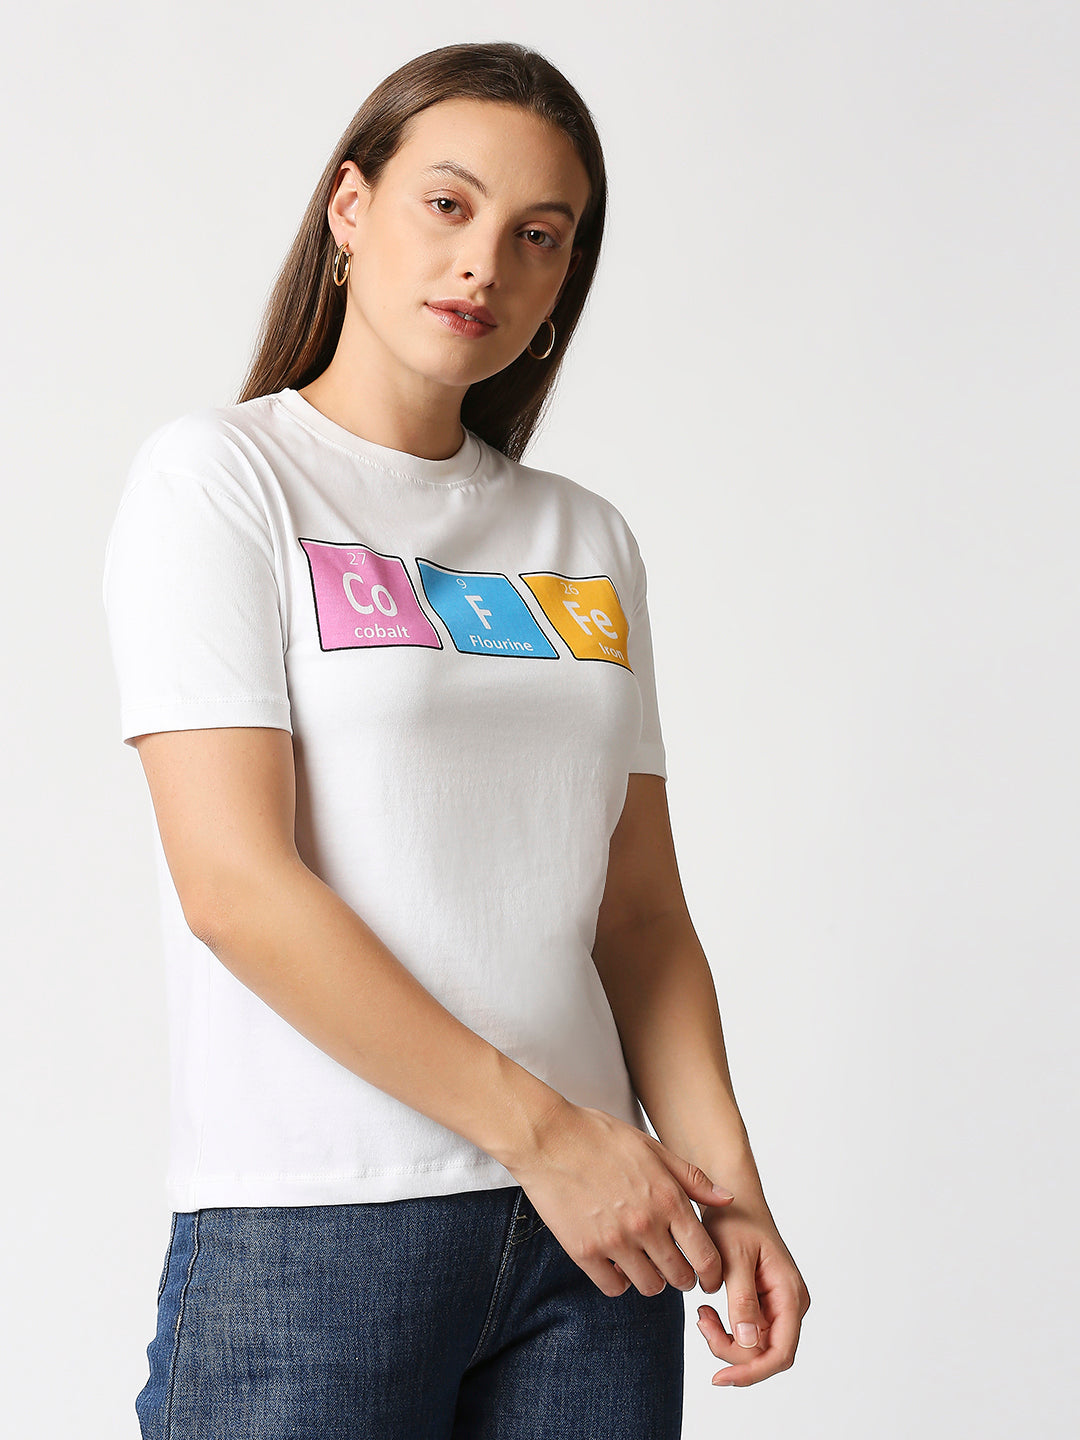 Buy Womenâ€™s Comfort fit White Chest print T-shirt